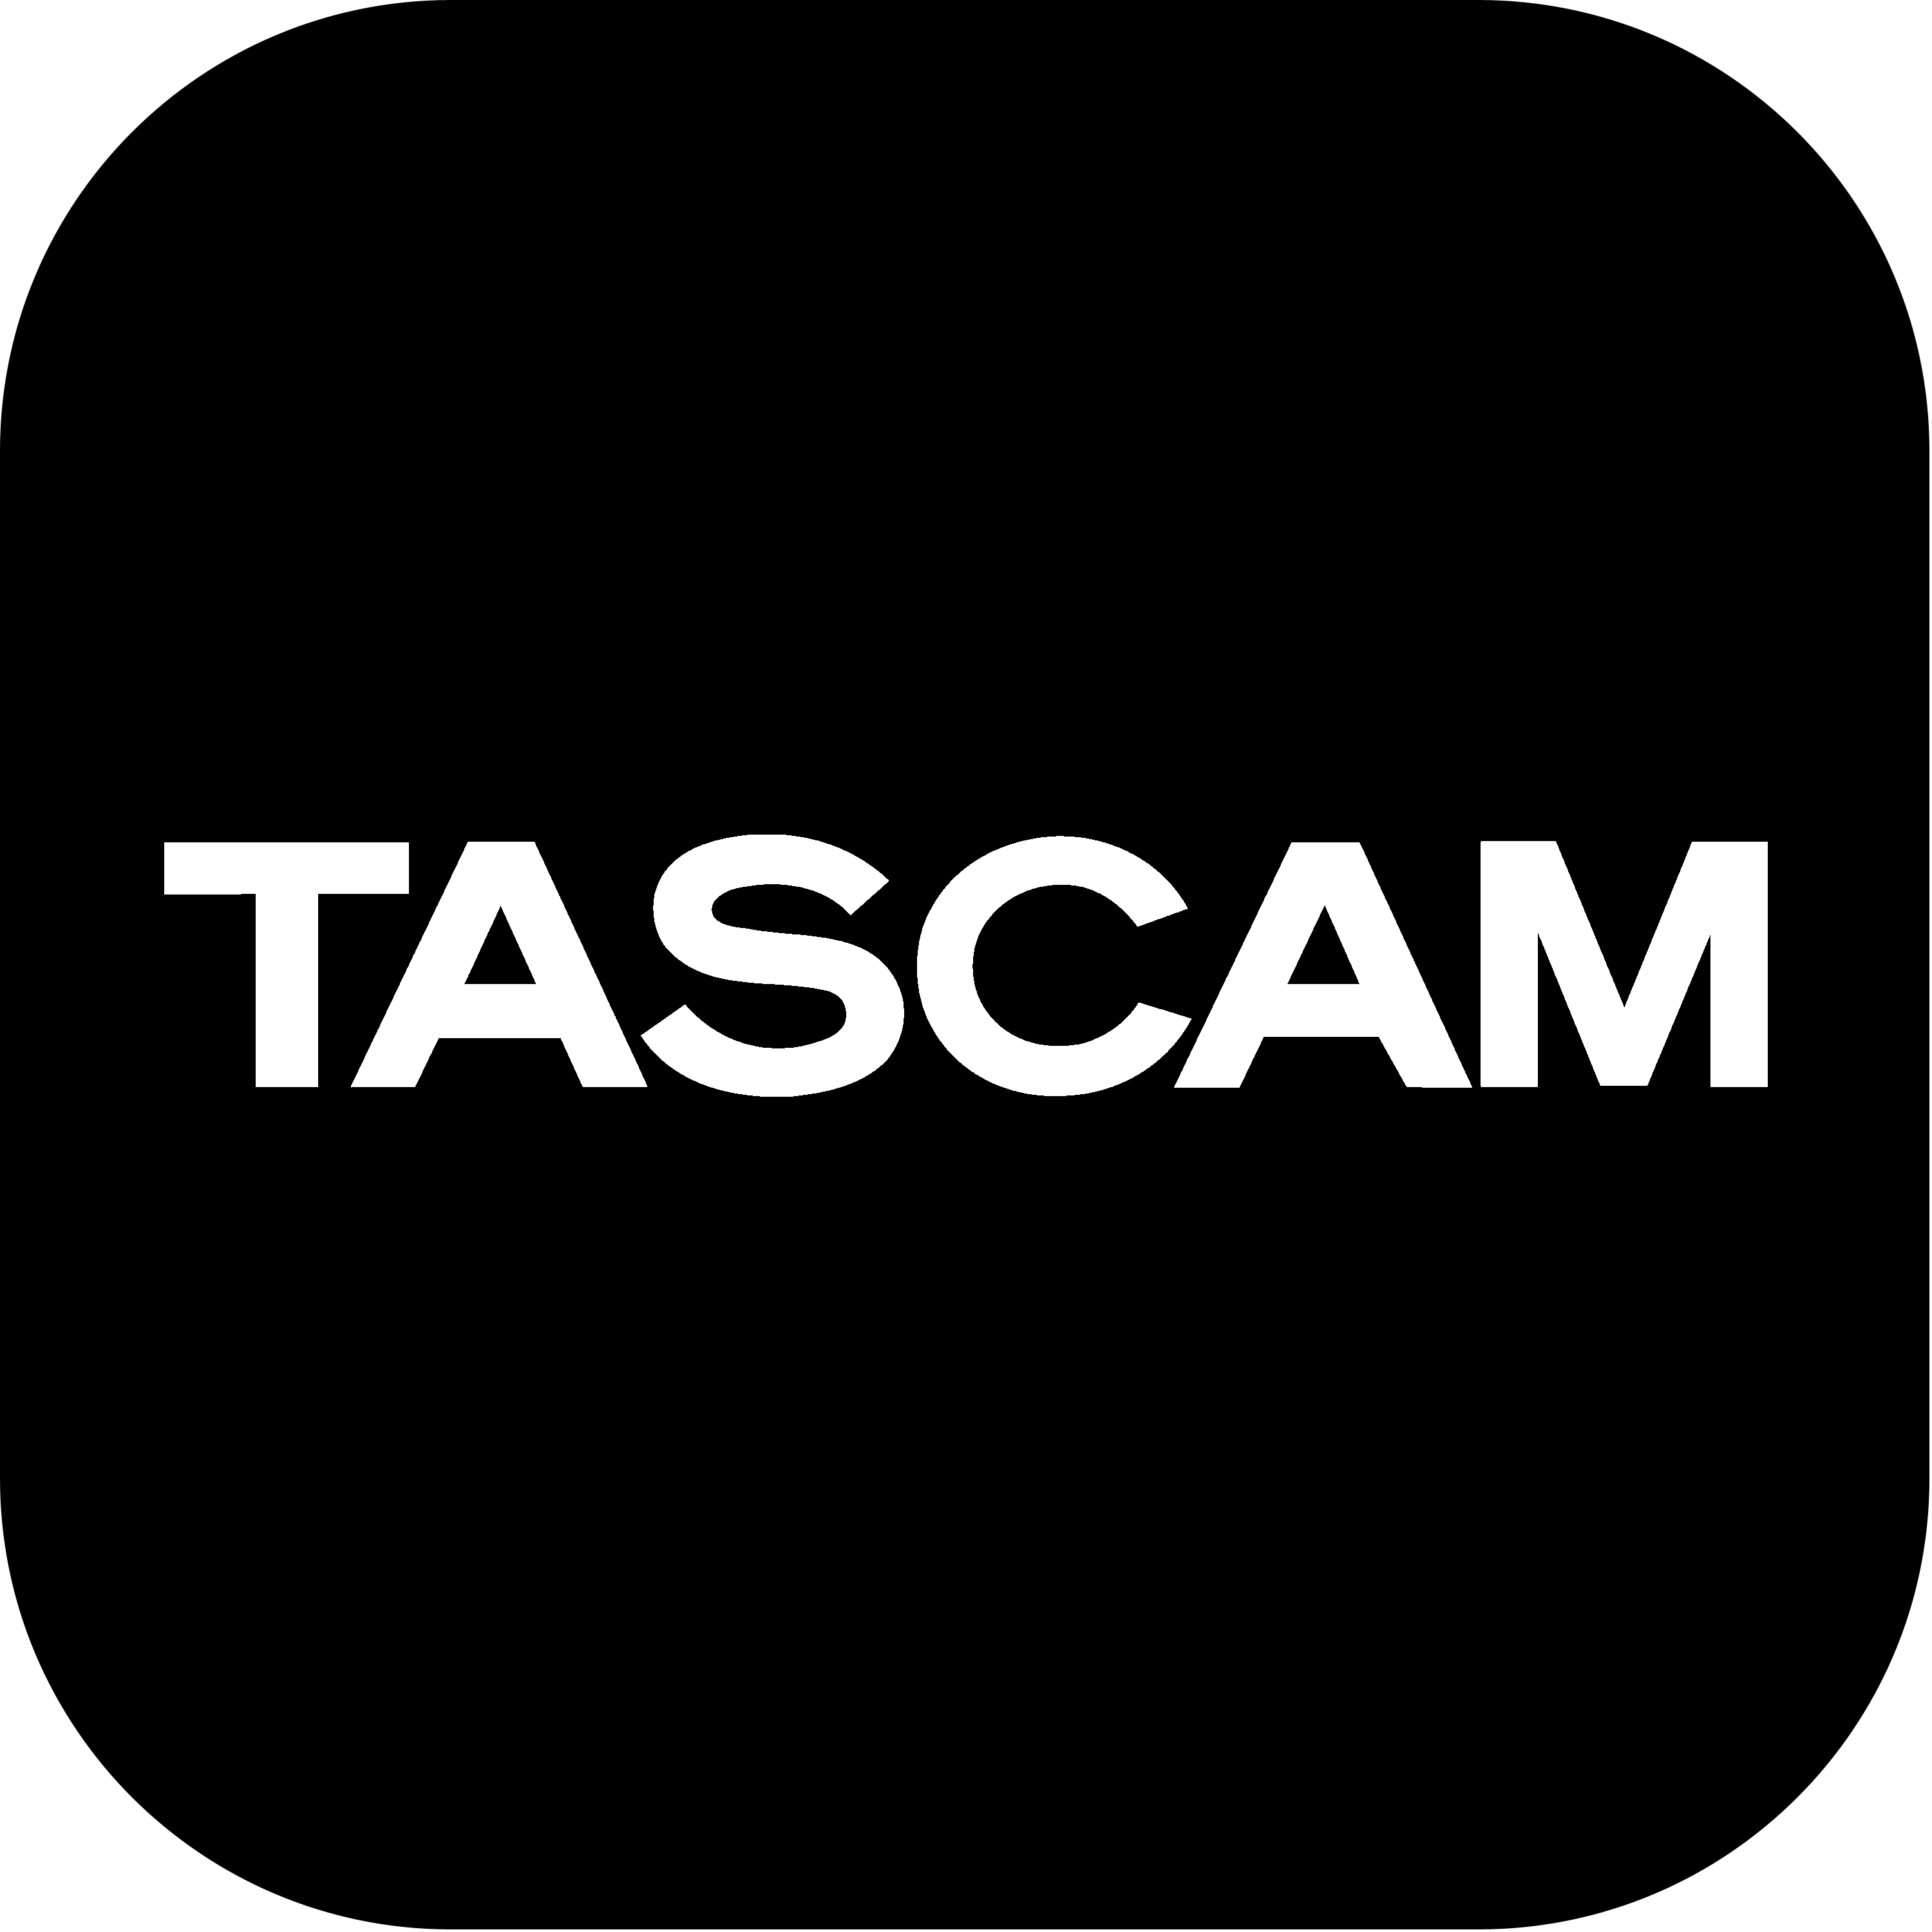 Tascam Logo Black Transparent Picture